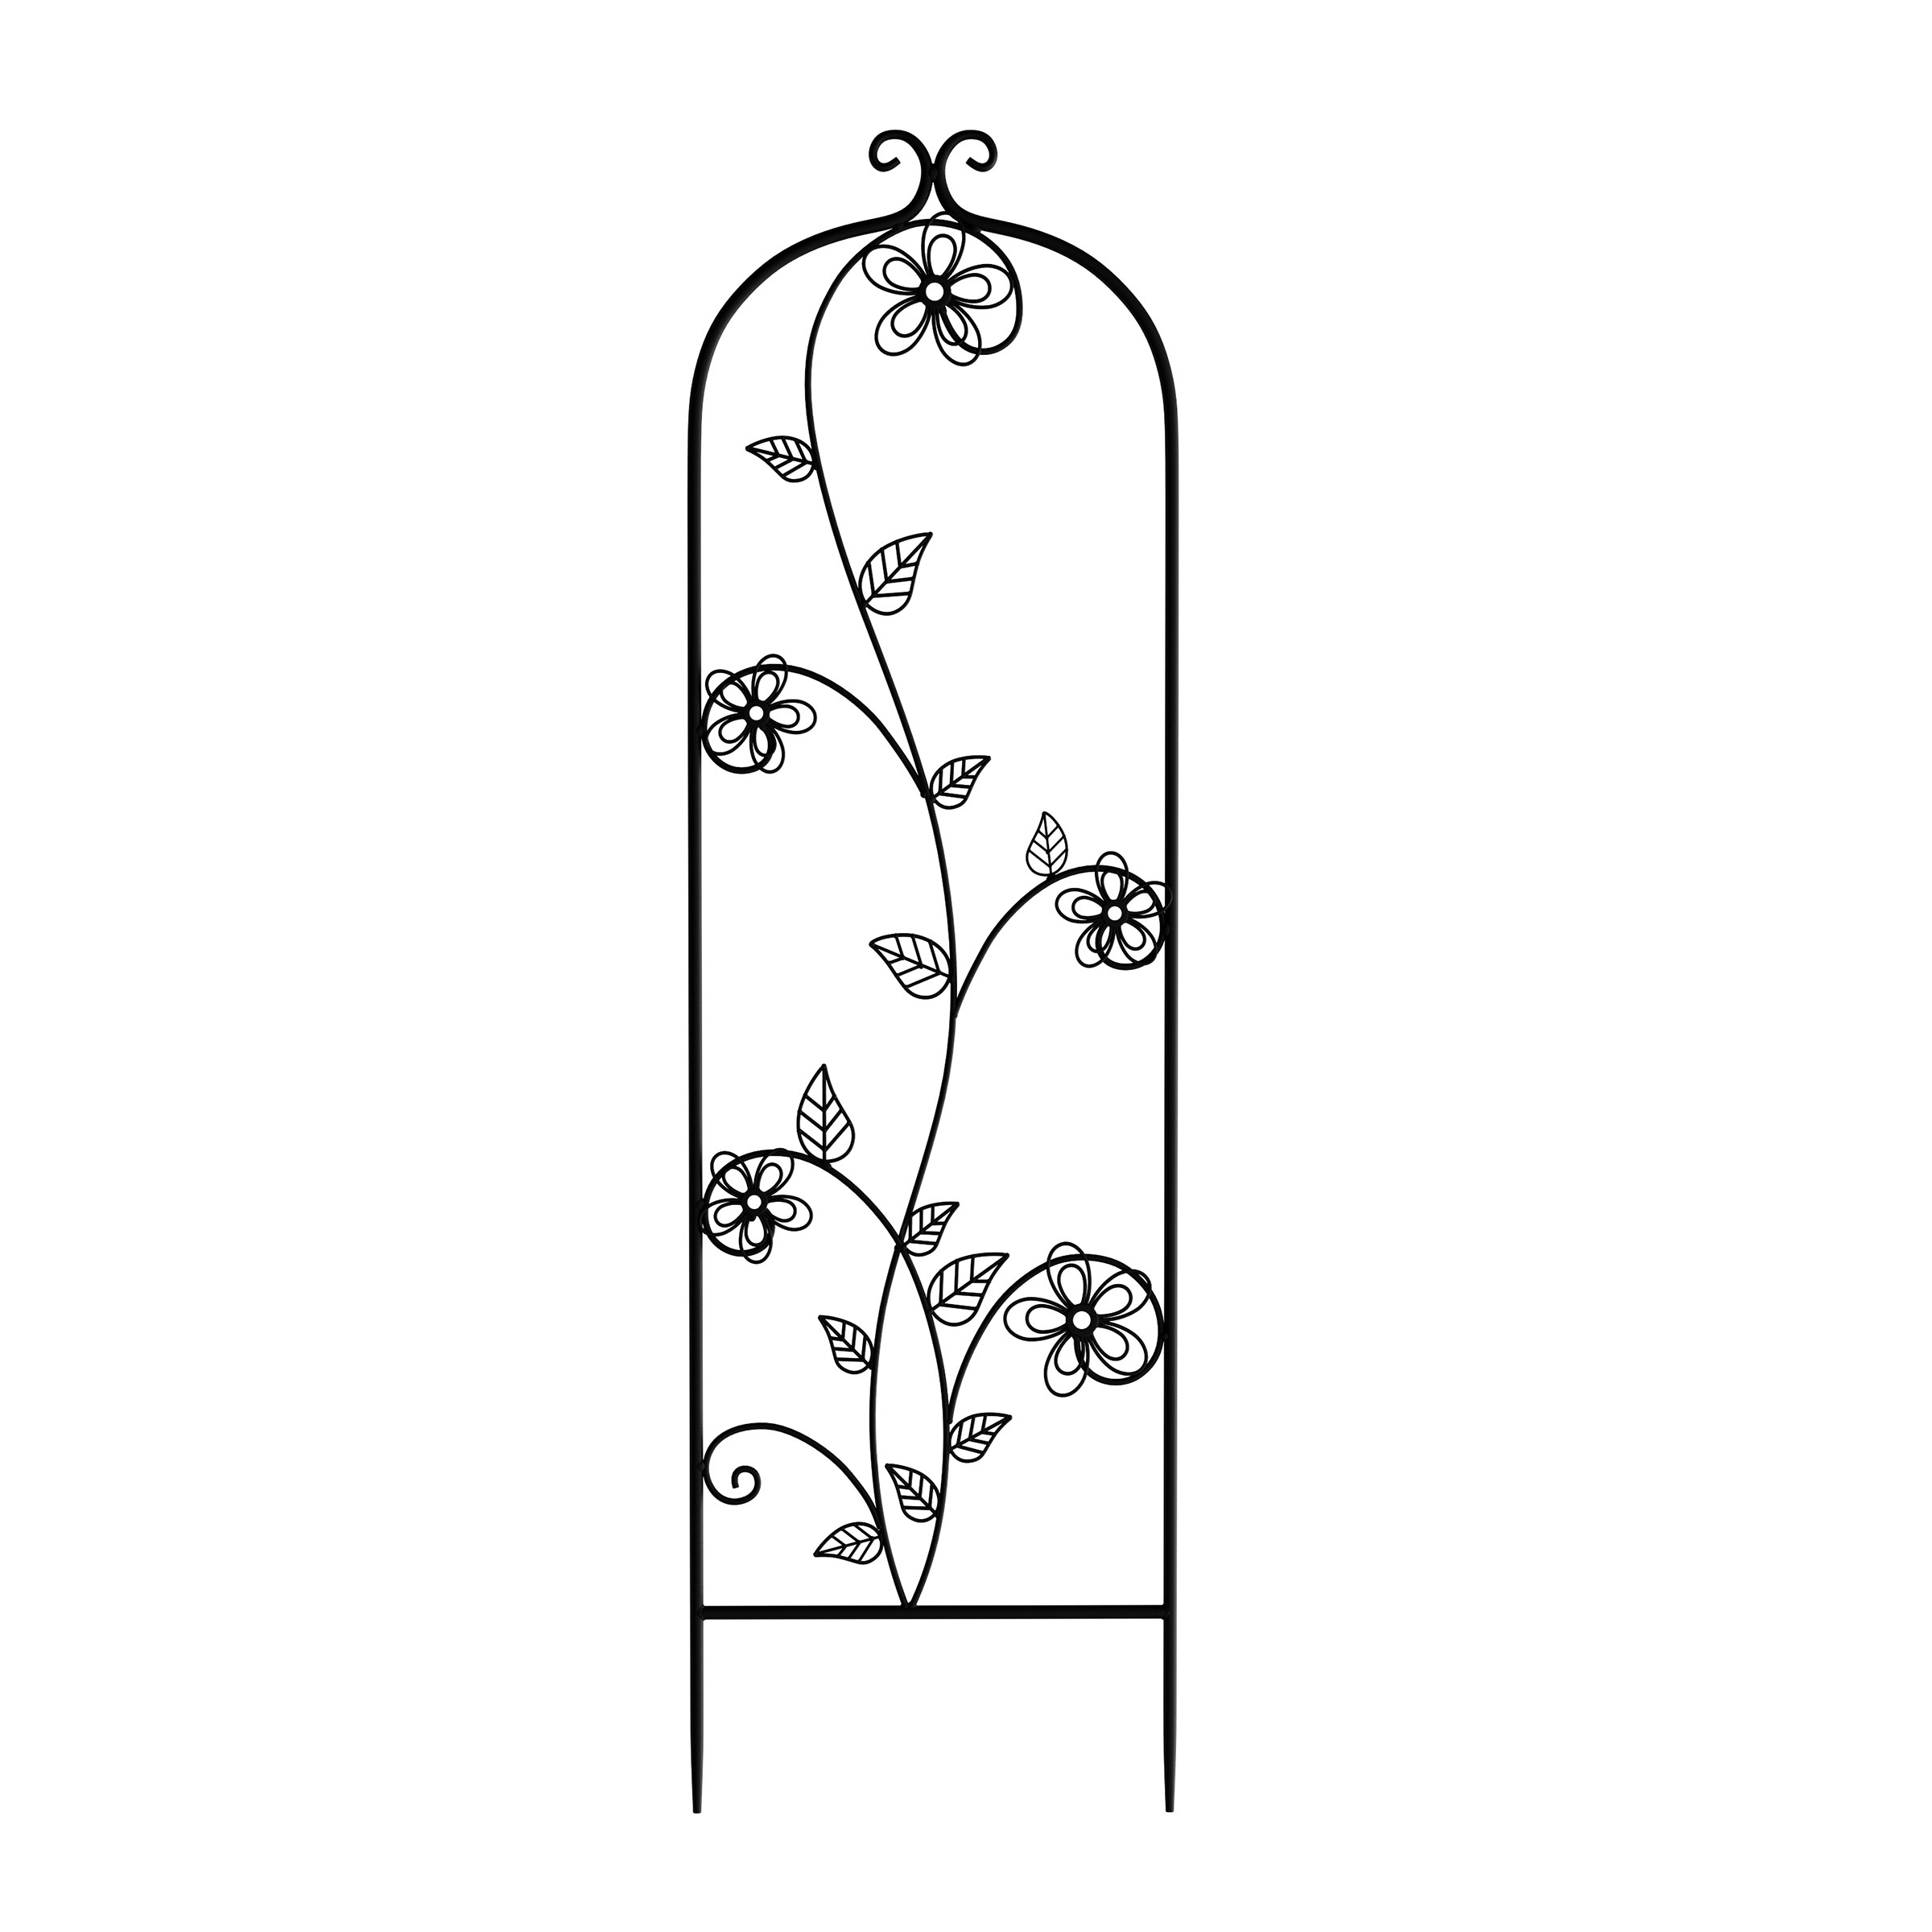 Garden Trellis- For Climbing Plants- Decorative Black Curving Flower Stem Metal Panel -For Vines, Roses, Vegetable Plants & Flowers